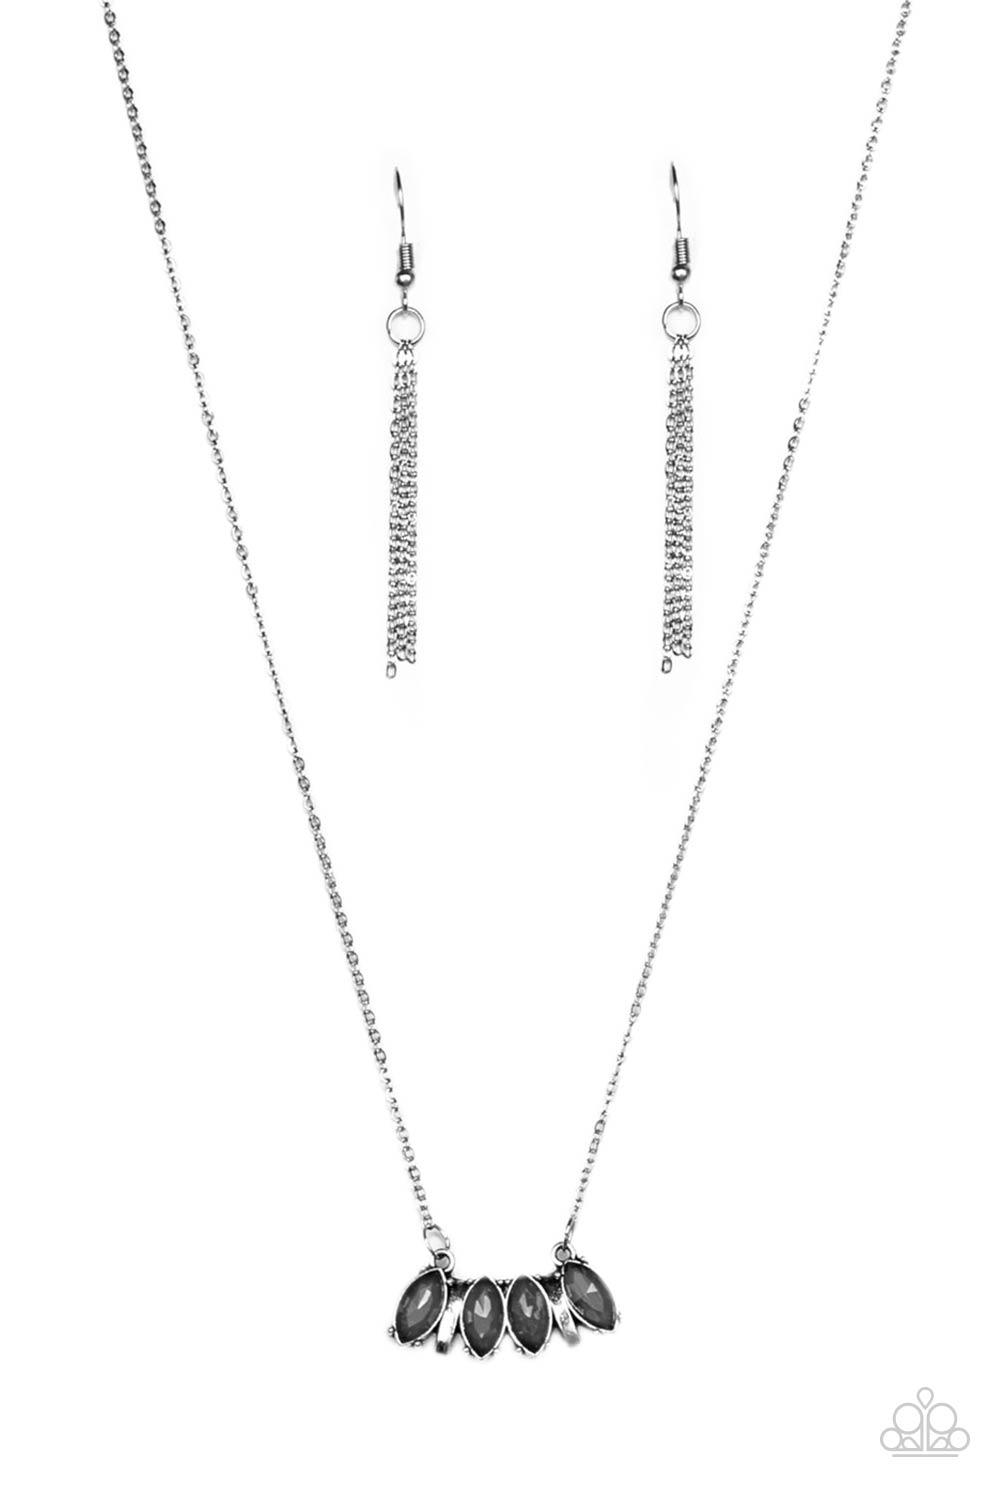 Paparazzi Accessories - Deco Decadence #N530 - Silver Necklace